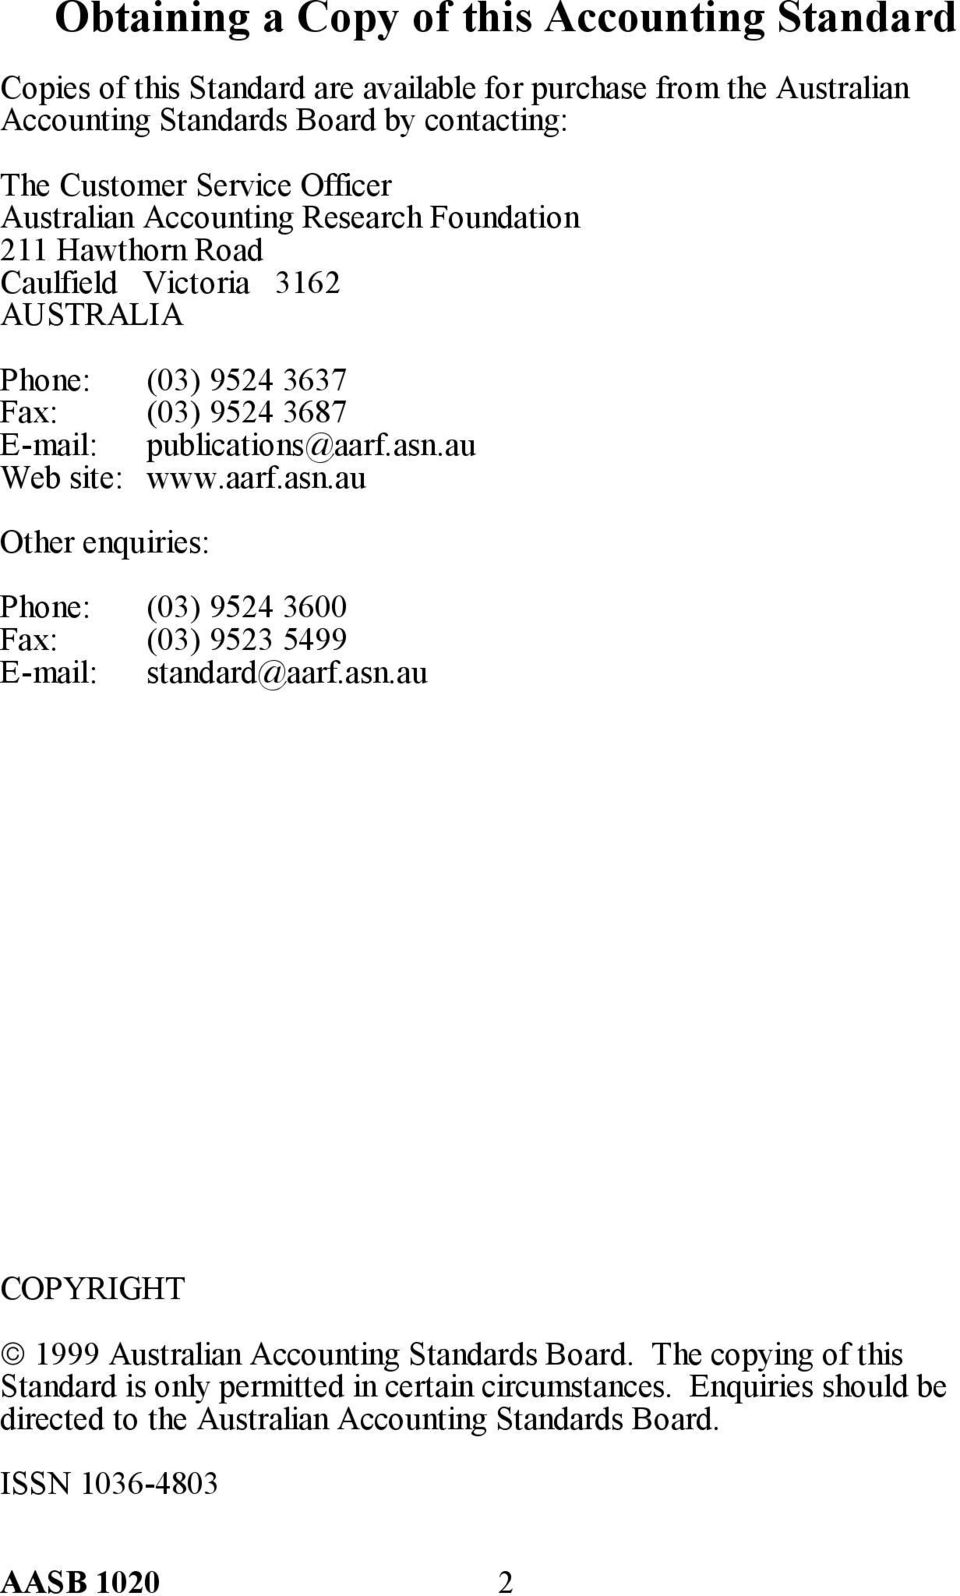 publications@aarf.asn.au Web site: www.aarf.asn.au Other enquiries: Phone: (03) 9524 3600 Fax: (03) 9523 5499 E-mail: standard@aarf.asn.au COPYRIGHT 1999 Australian Accounting Standards Board.